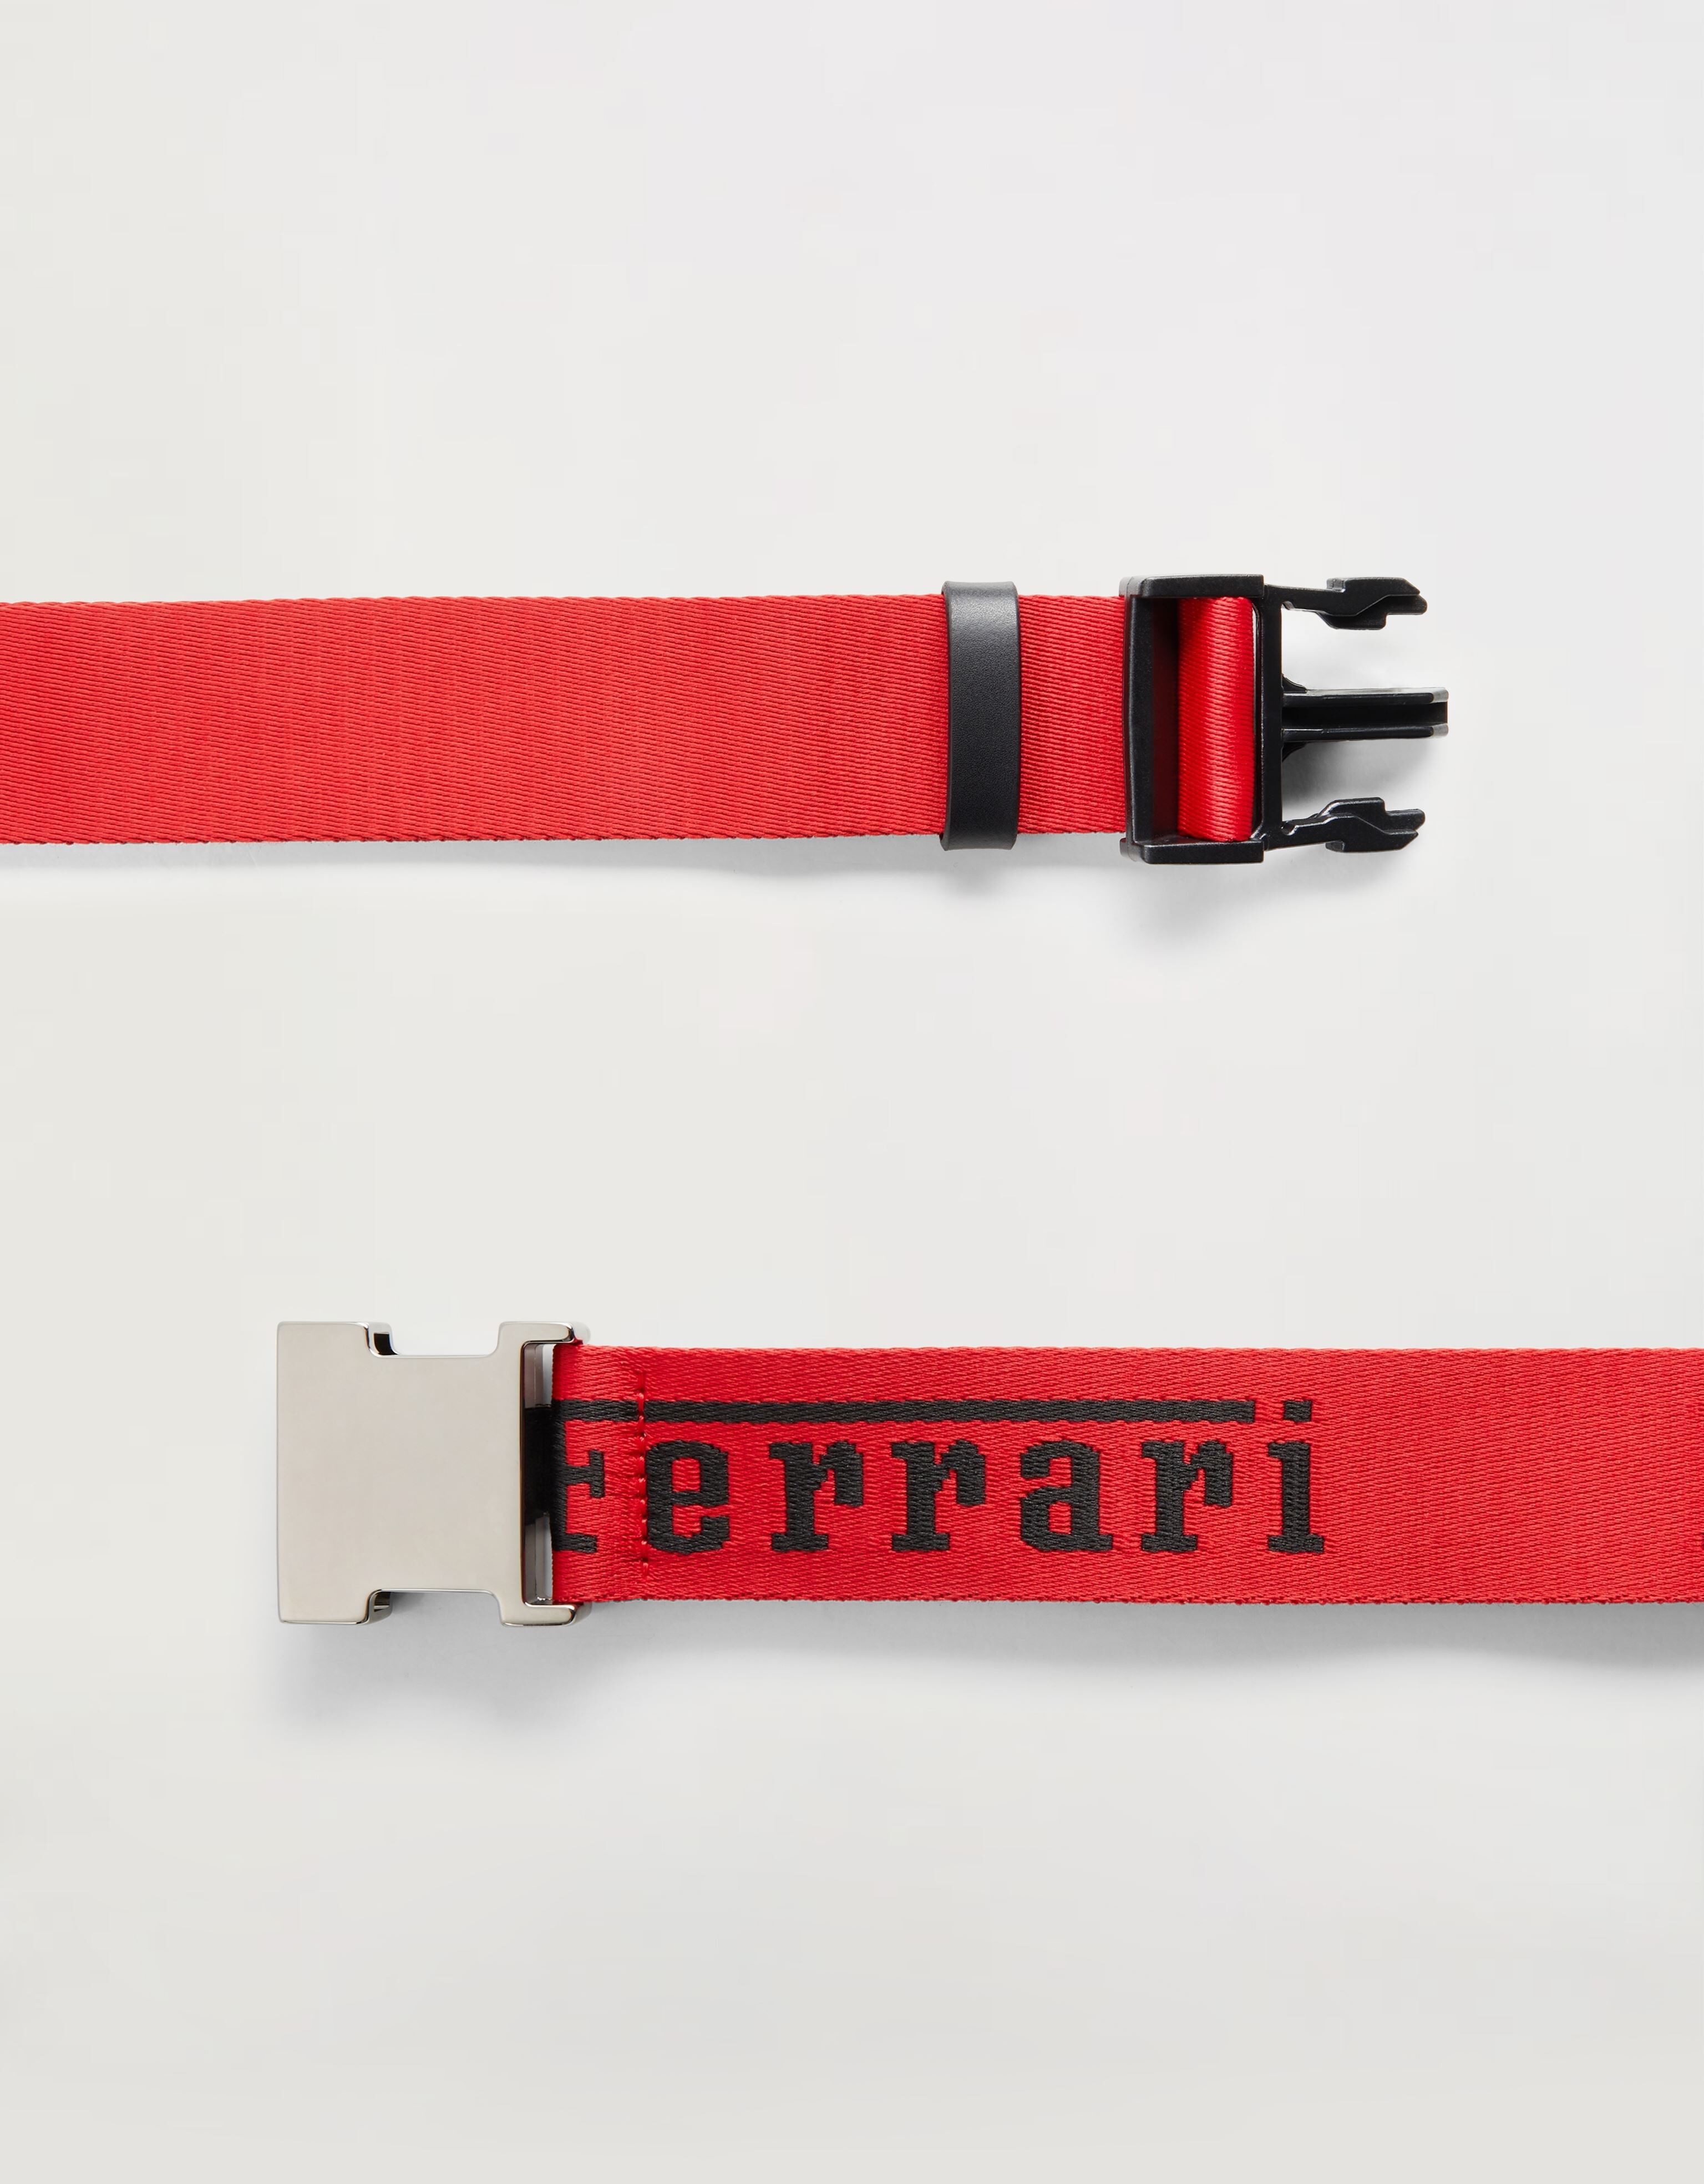 Ferrari 法拉利徽标饰带腰带 Rosso Corsa 红色 20017f